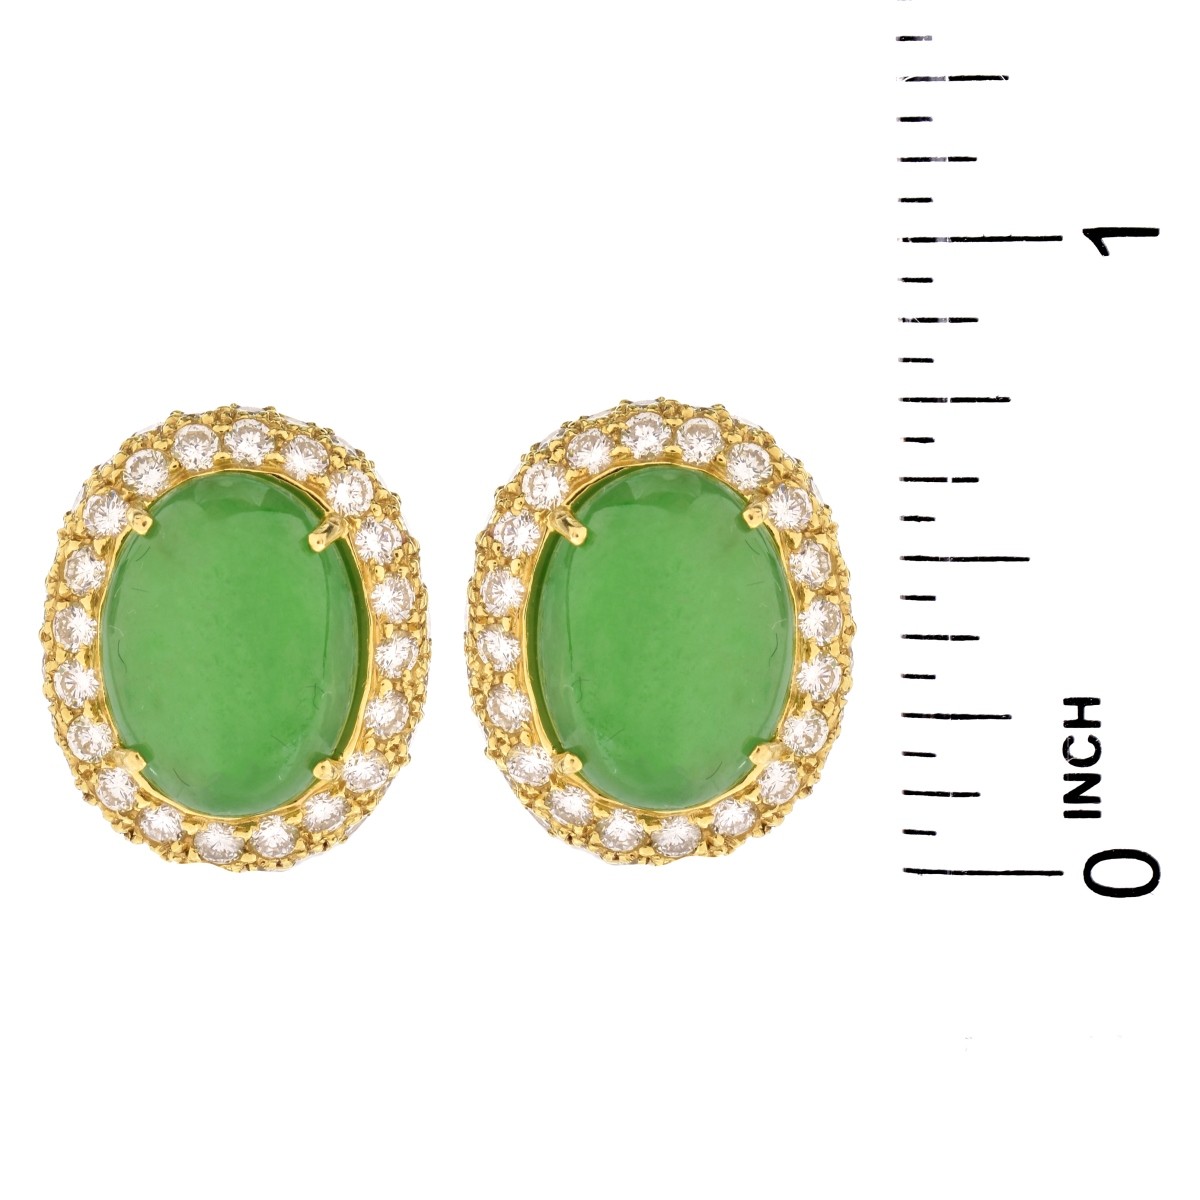 Jade, Diamond and 18K Gold Earrings